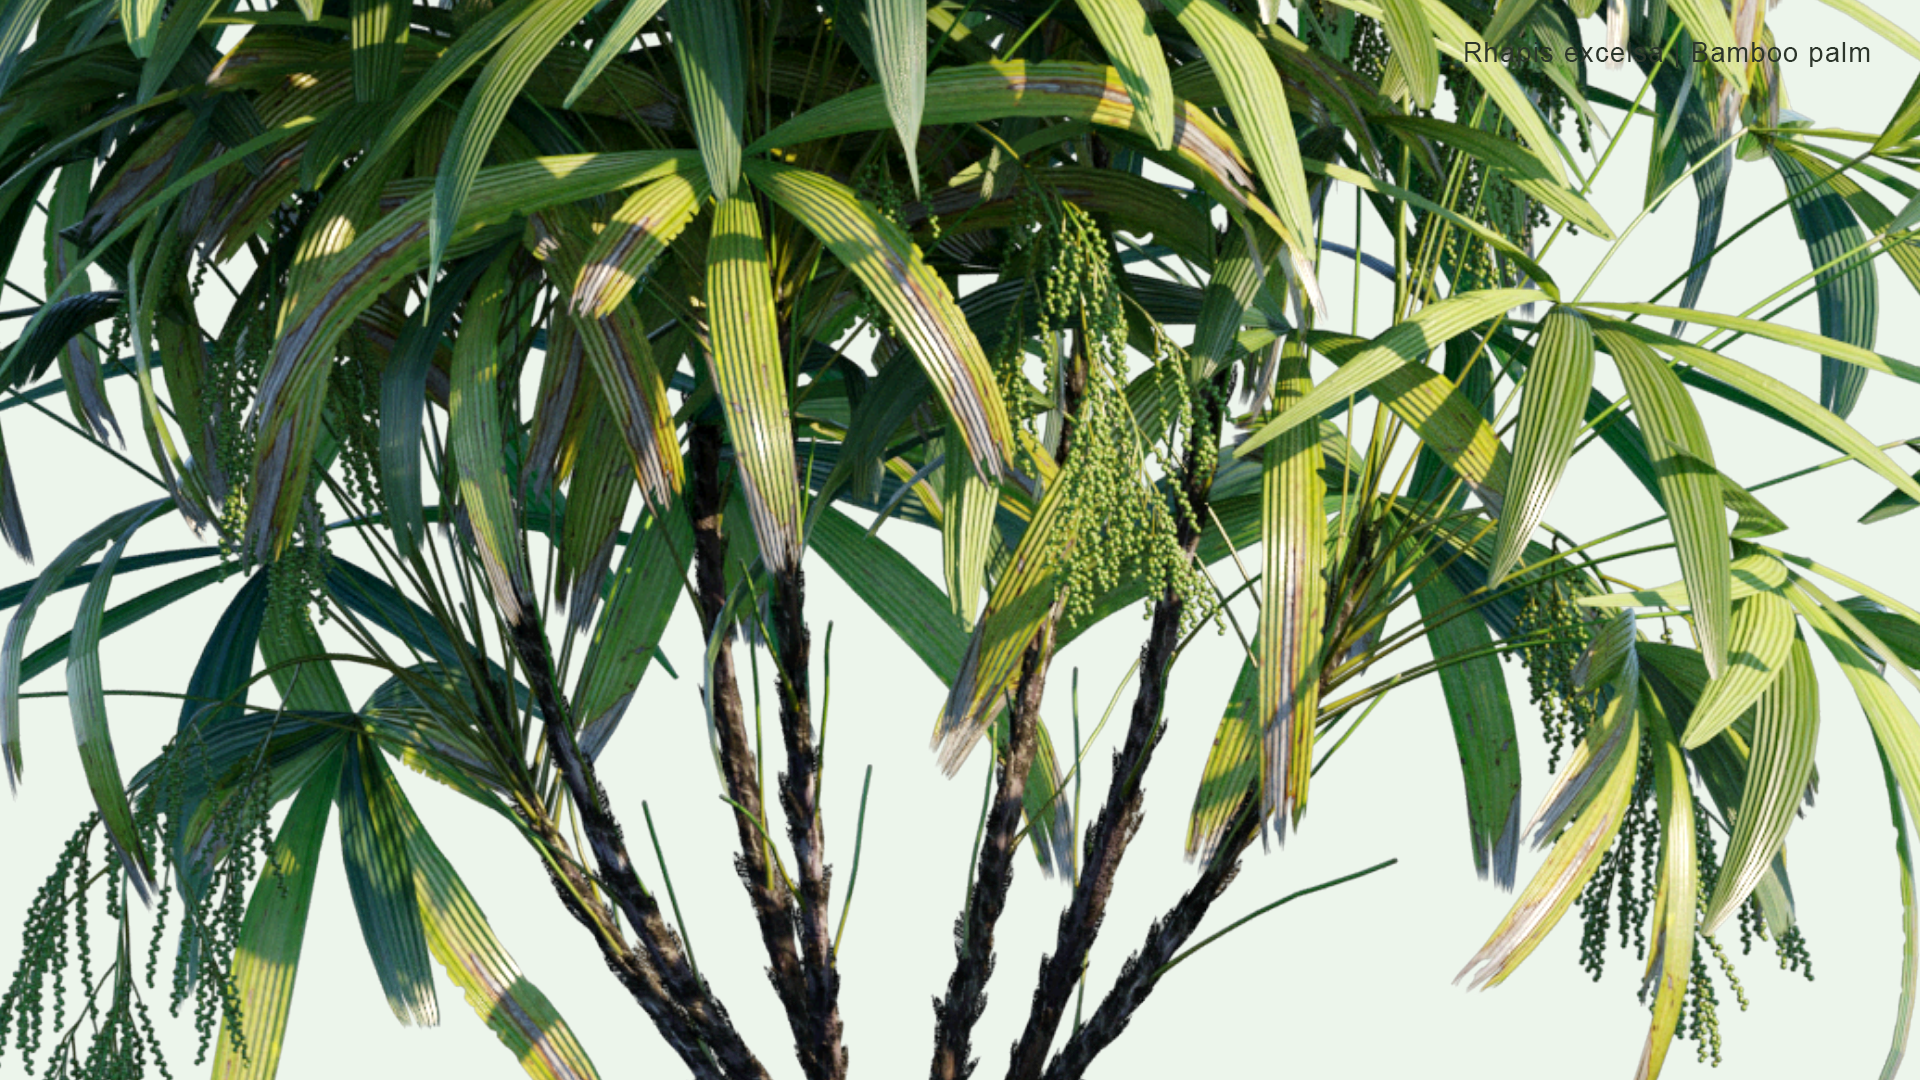 2D Rhapis Excelsa - Bamboo Palm